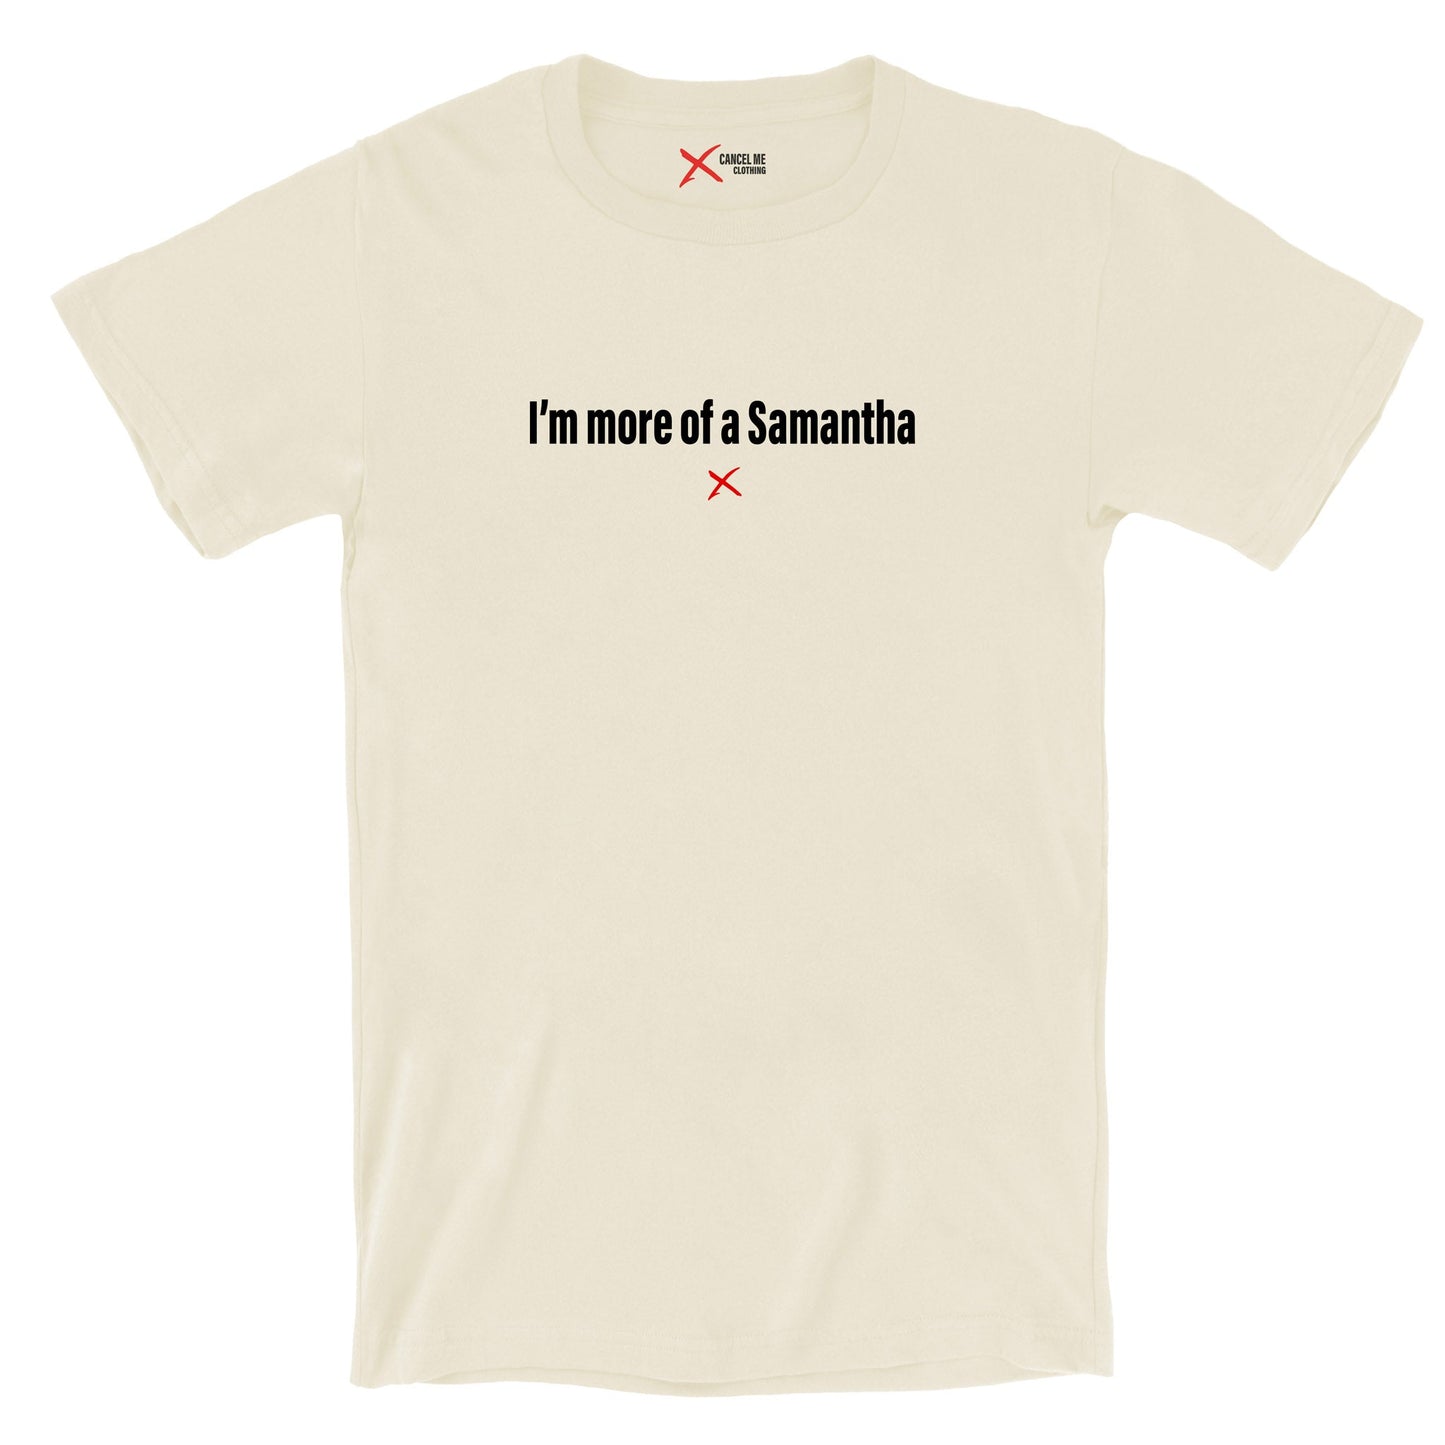 I'm more of a Samantha - Shirt